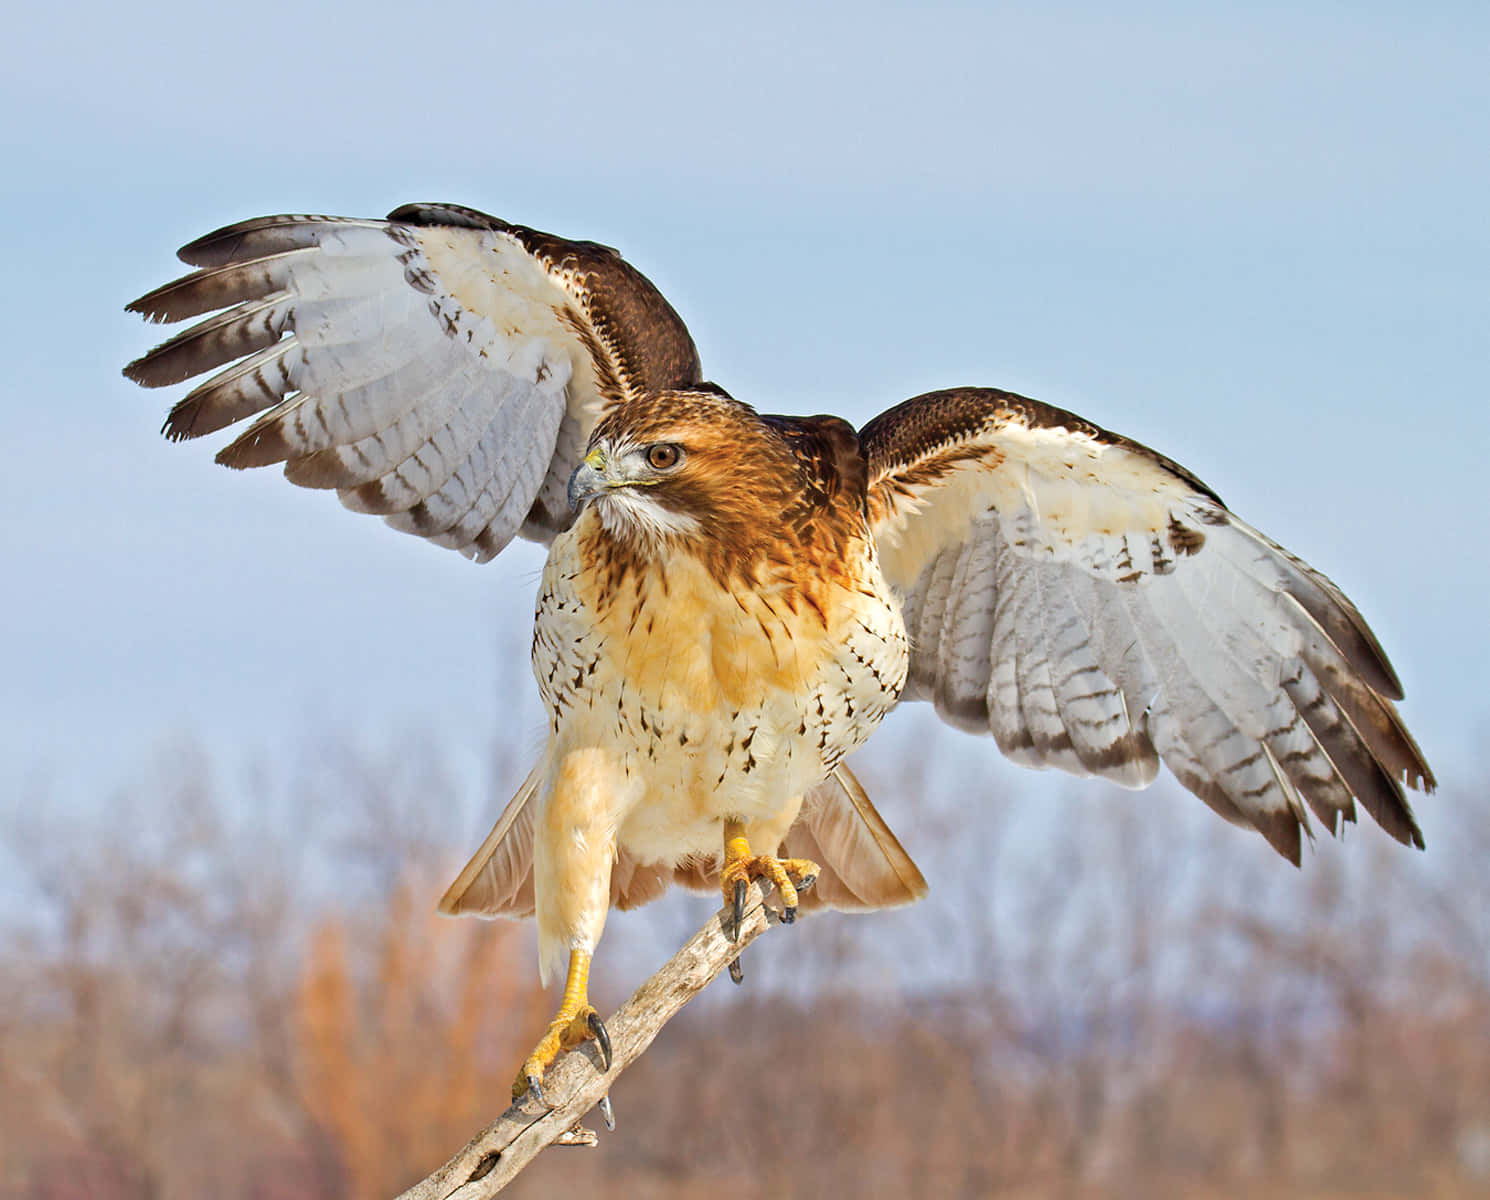 Caption: Majestic Hawk On The Prowl